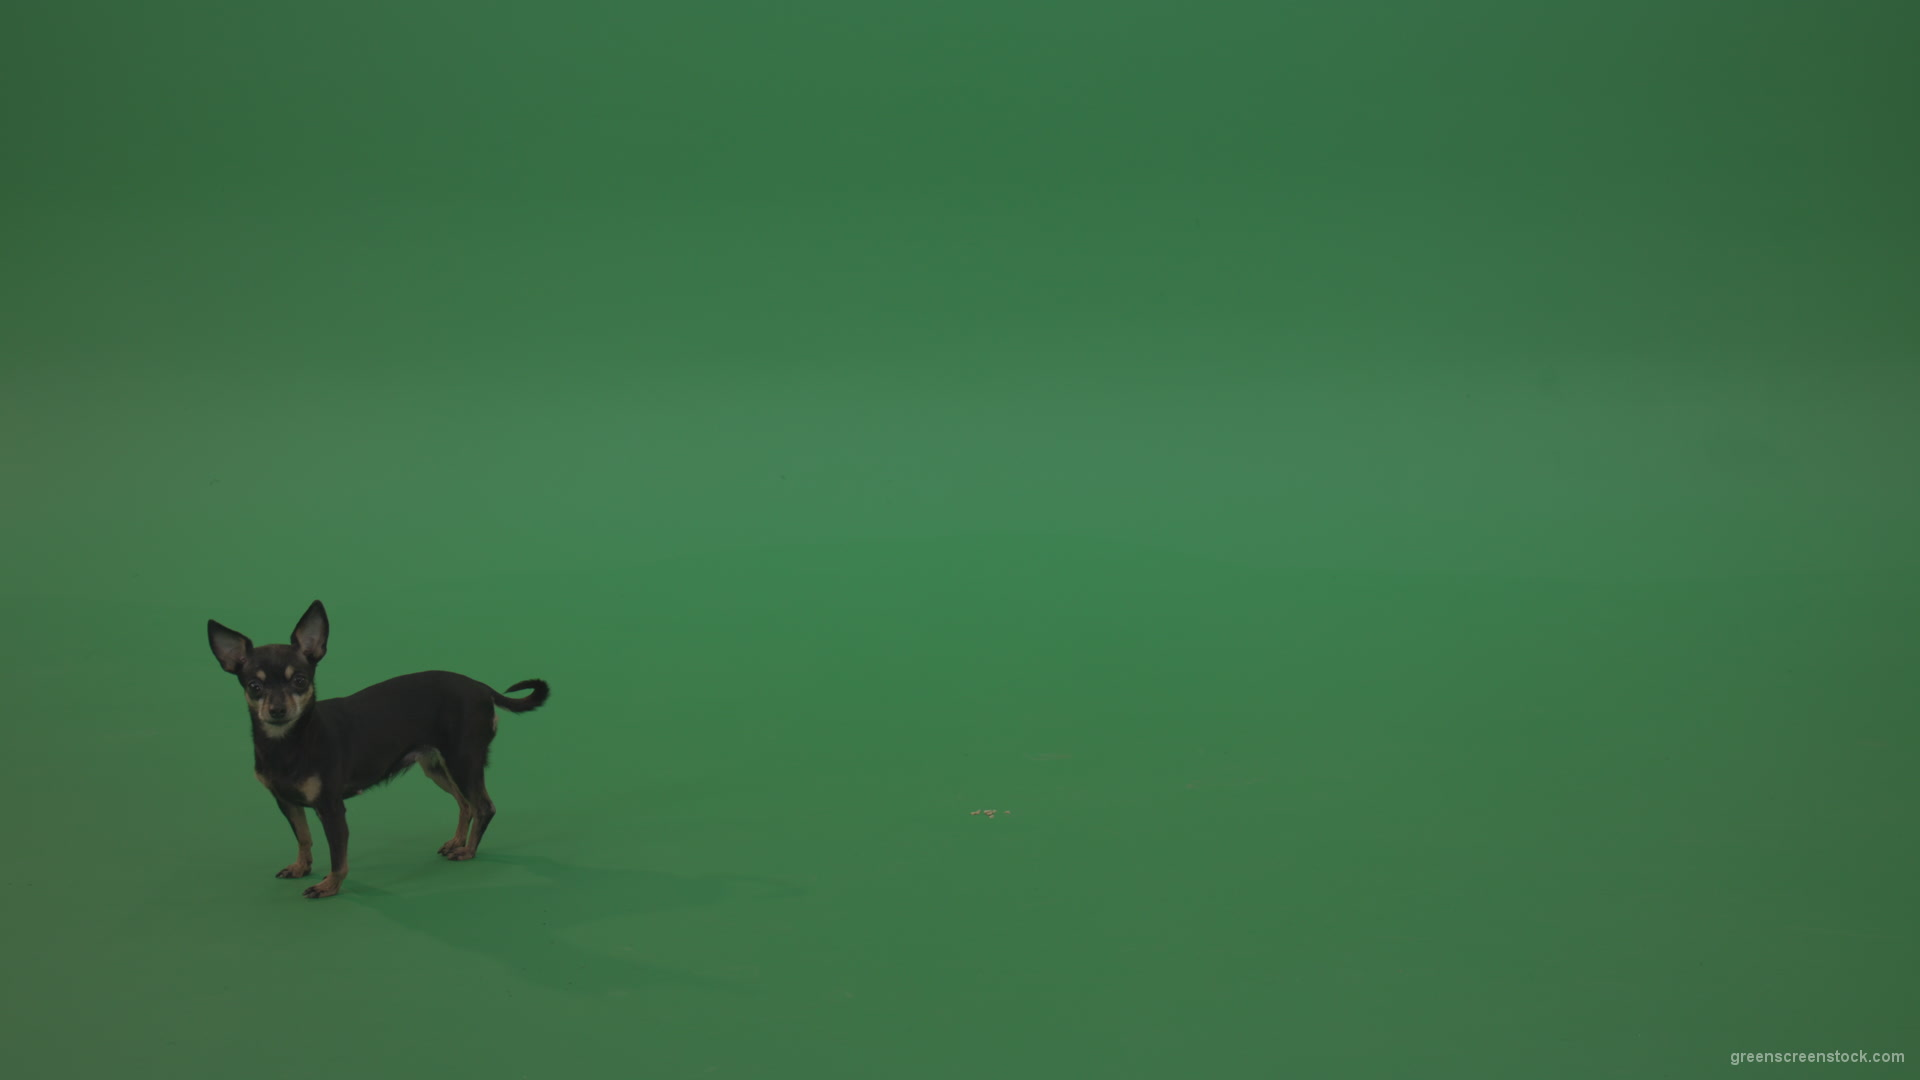 Chihuahua-small-puppy-dog-barking-in-green-screen-studio_006 Green Screen Stock